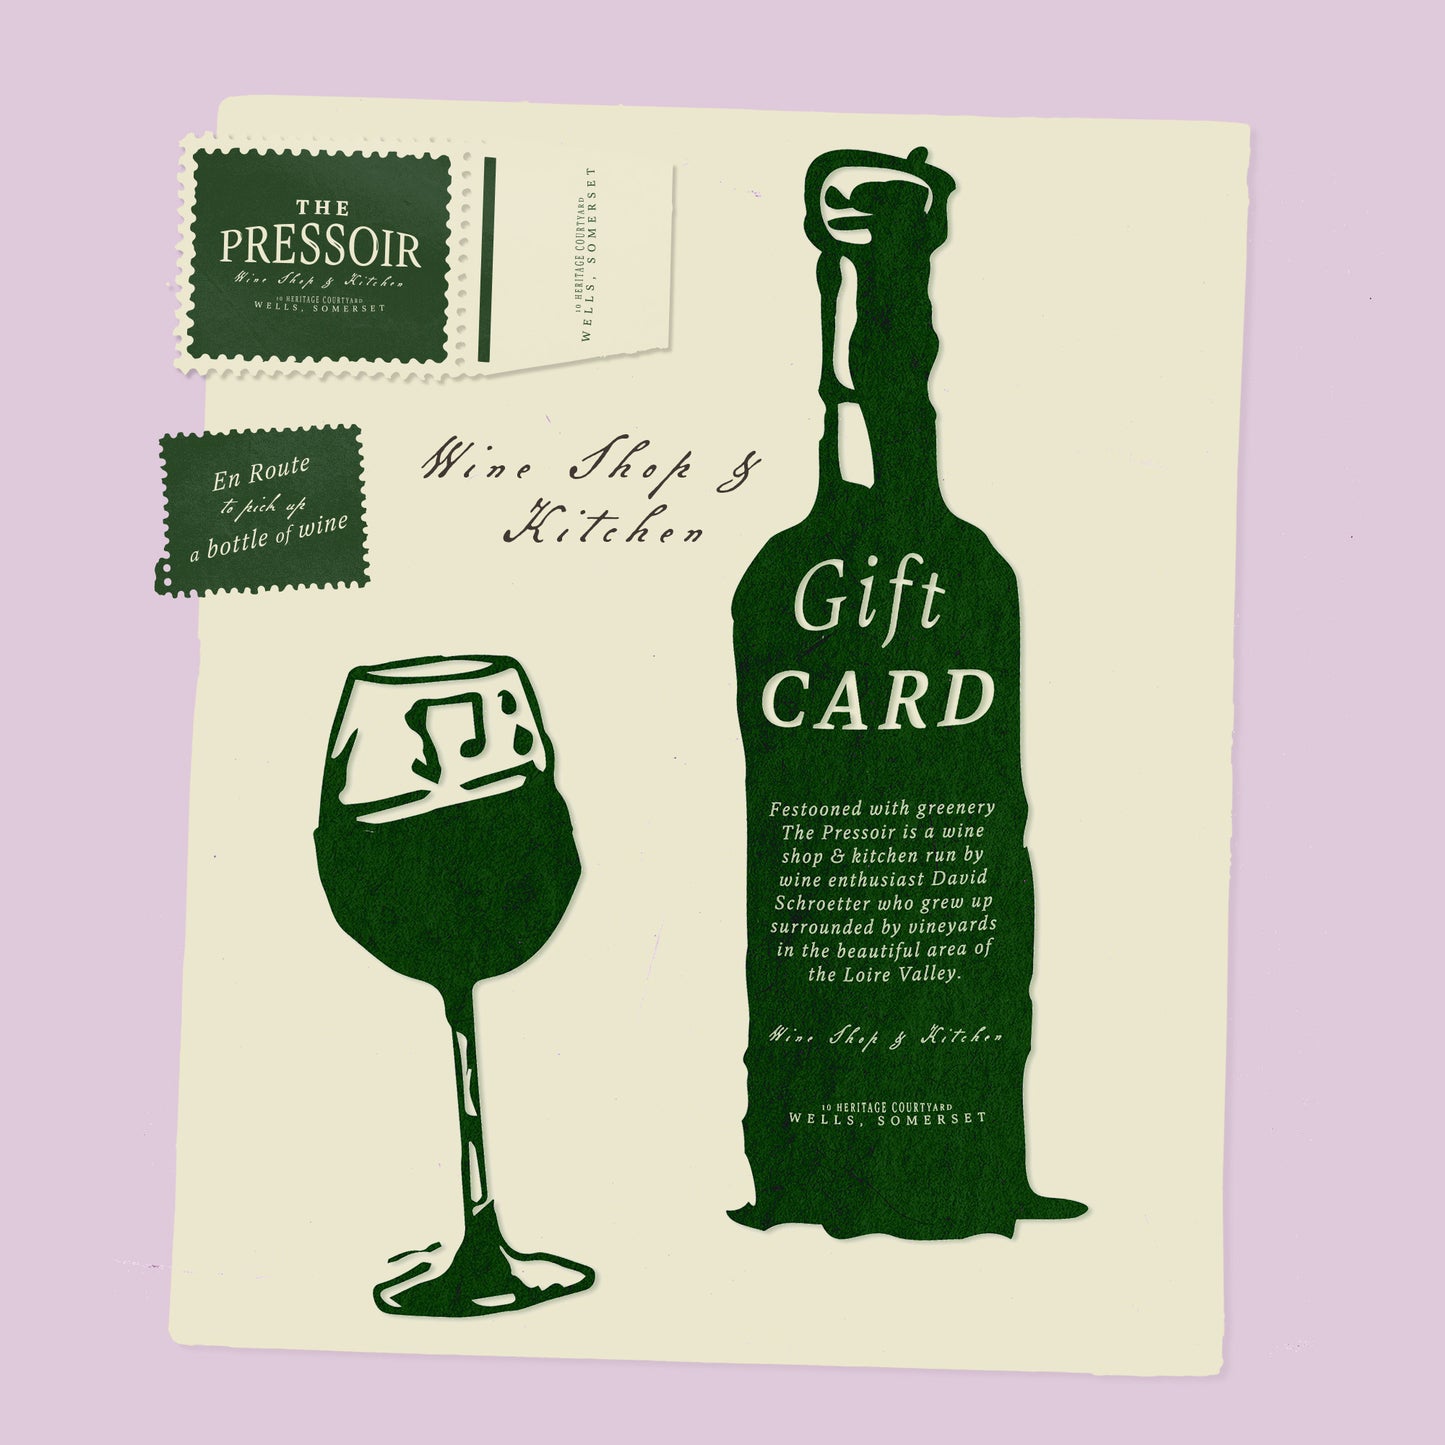 The Pressoir Gift Card